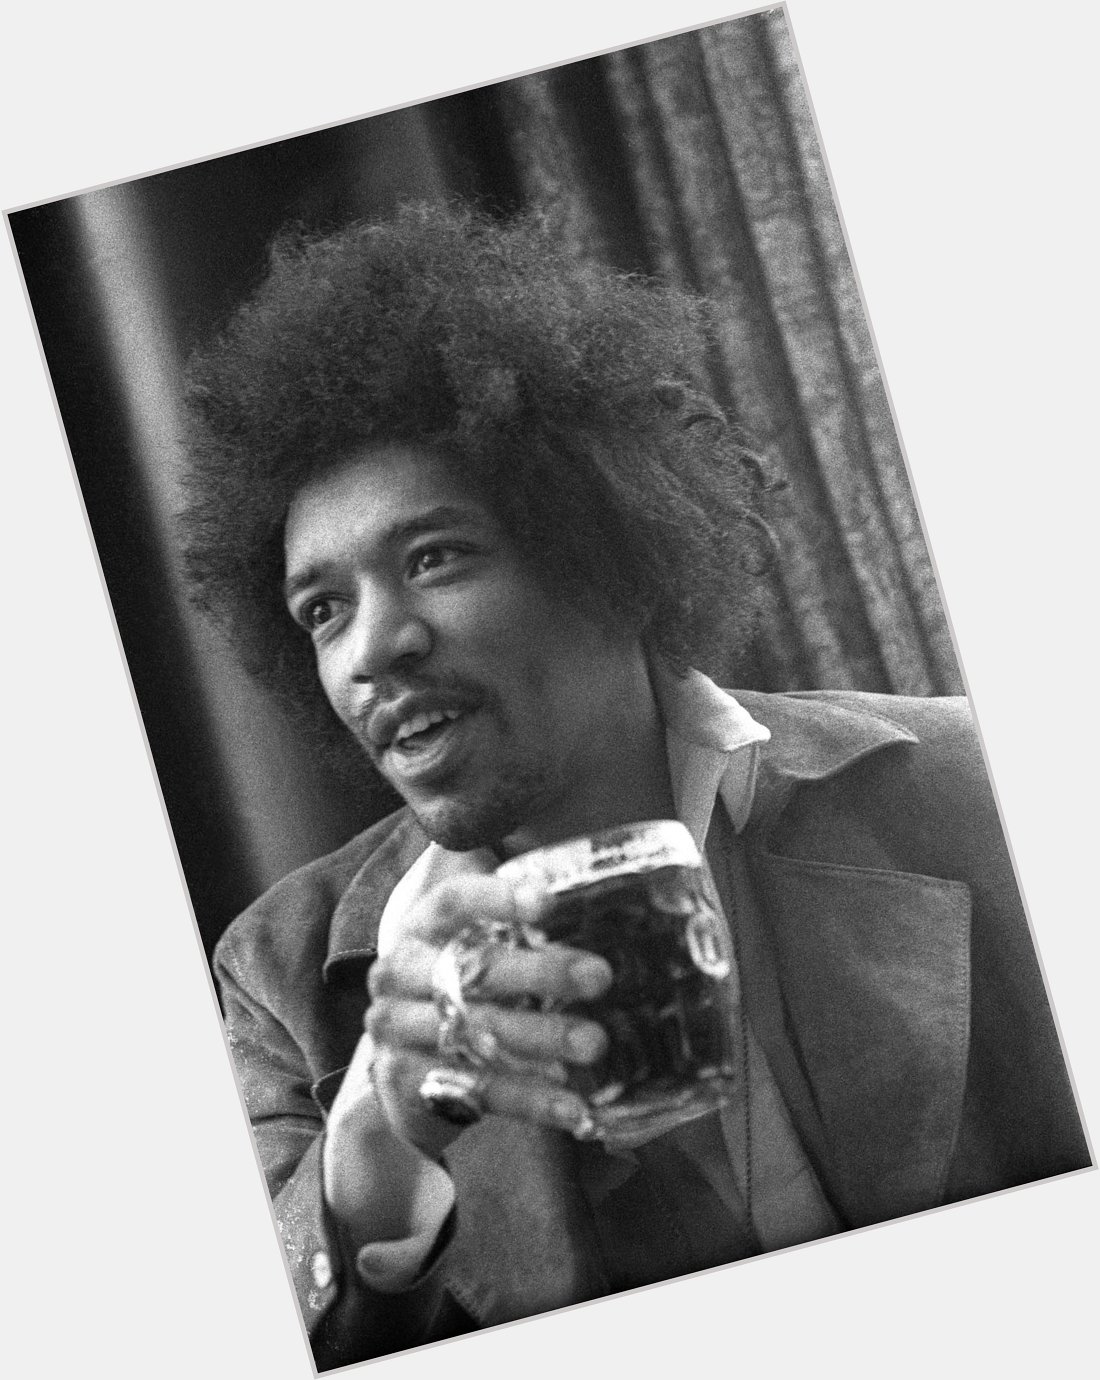 Jimi Hendrix was born on this day 78 years ago. 
Happy birthday Jimi! 